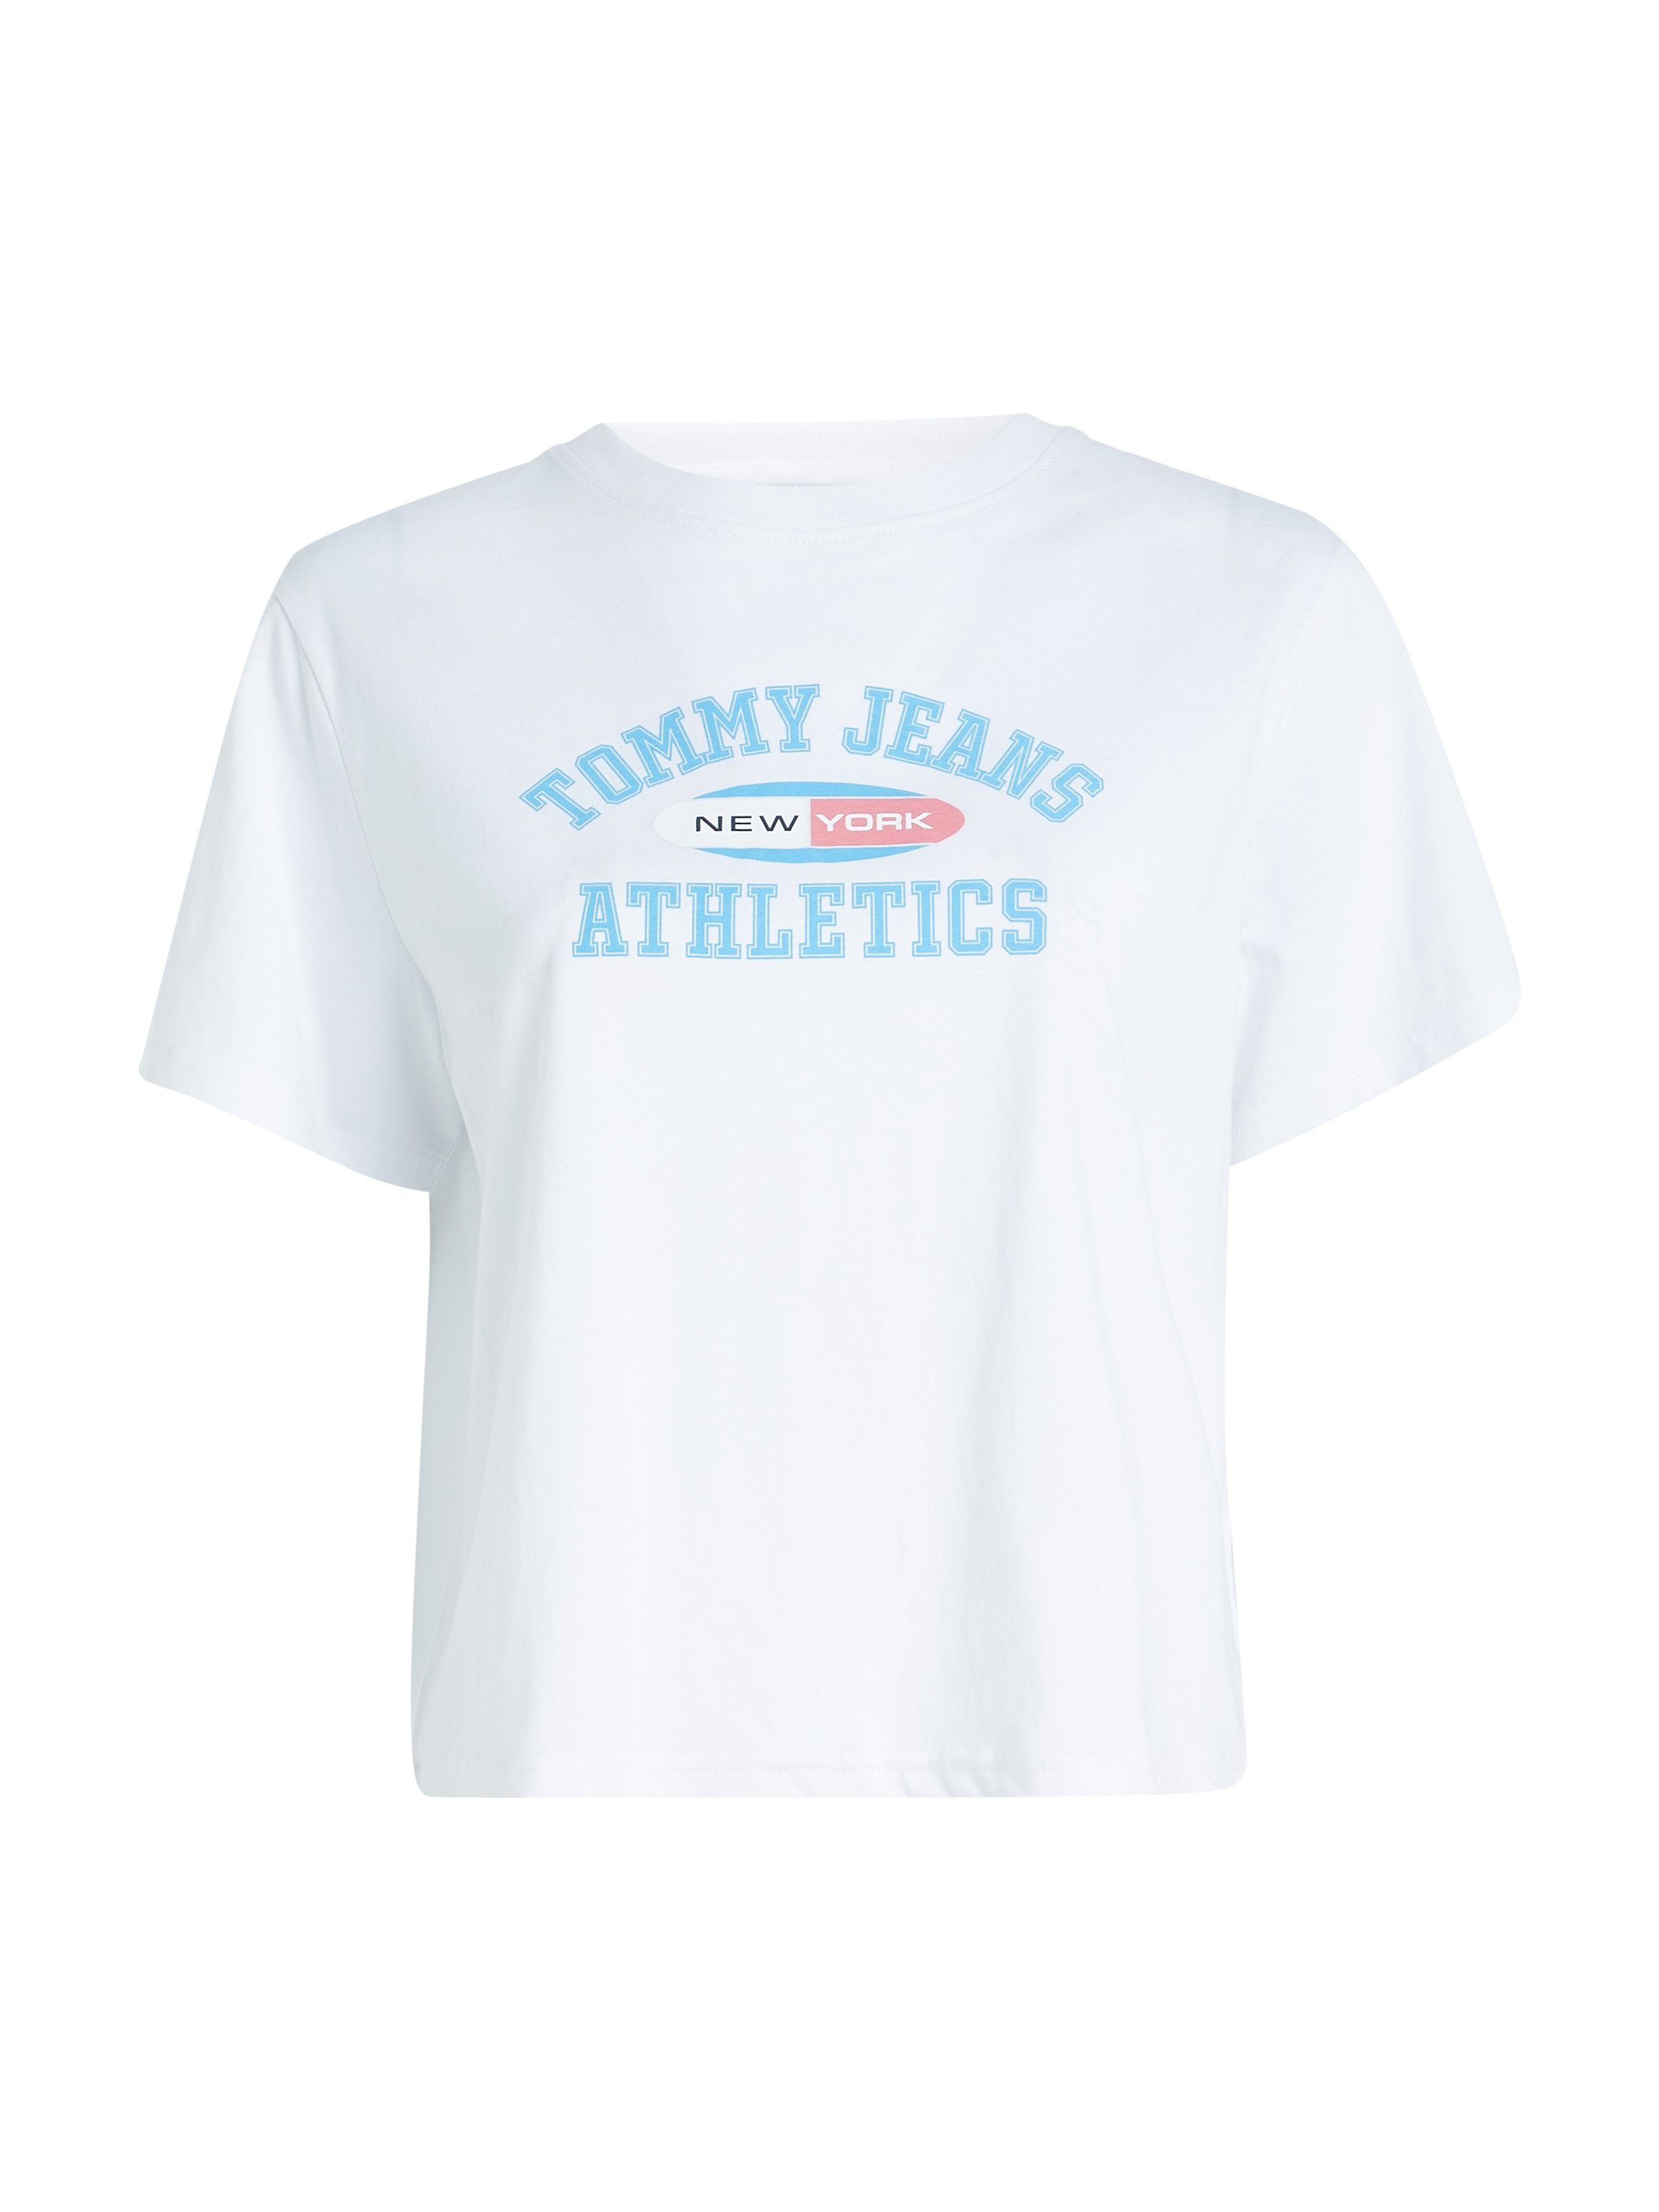 Tommy Jeans TJ CLS TEE sommerlichem mit Logodruck TJW T-Shirt ATH